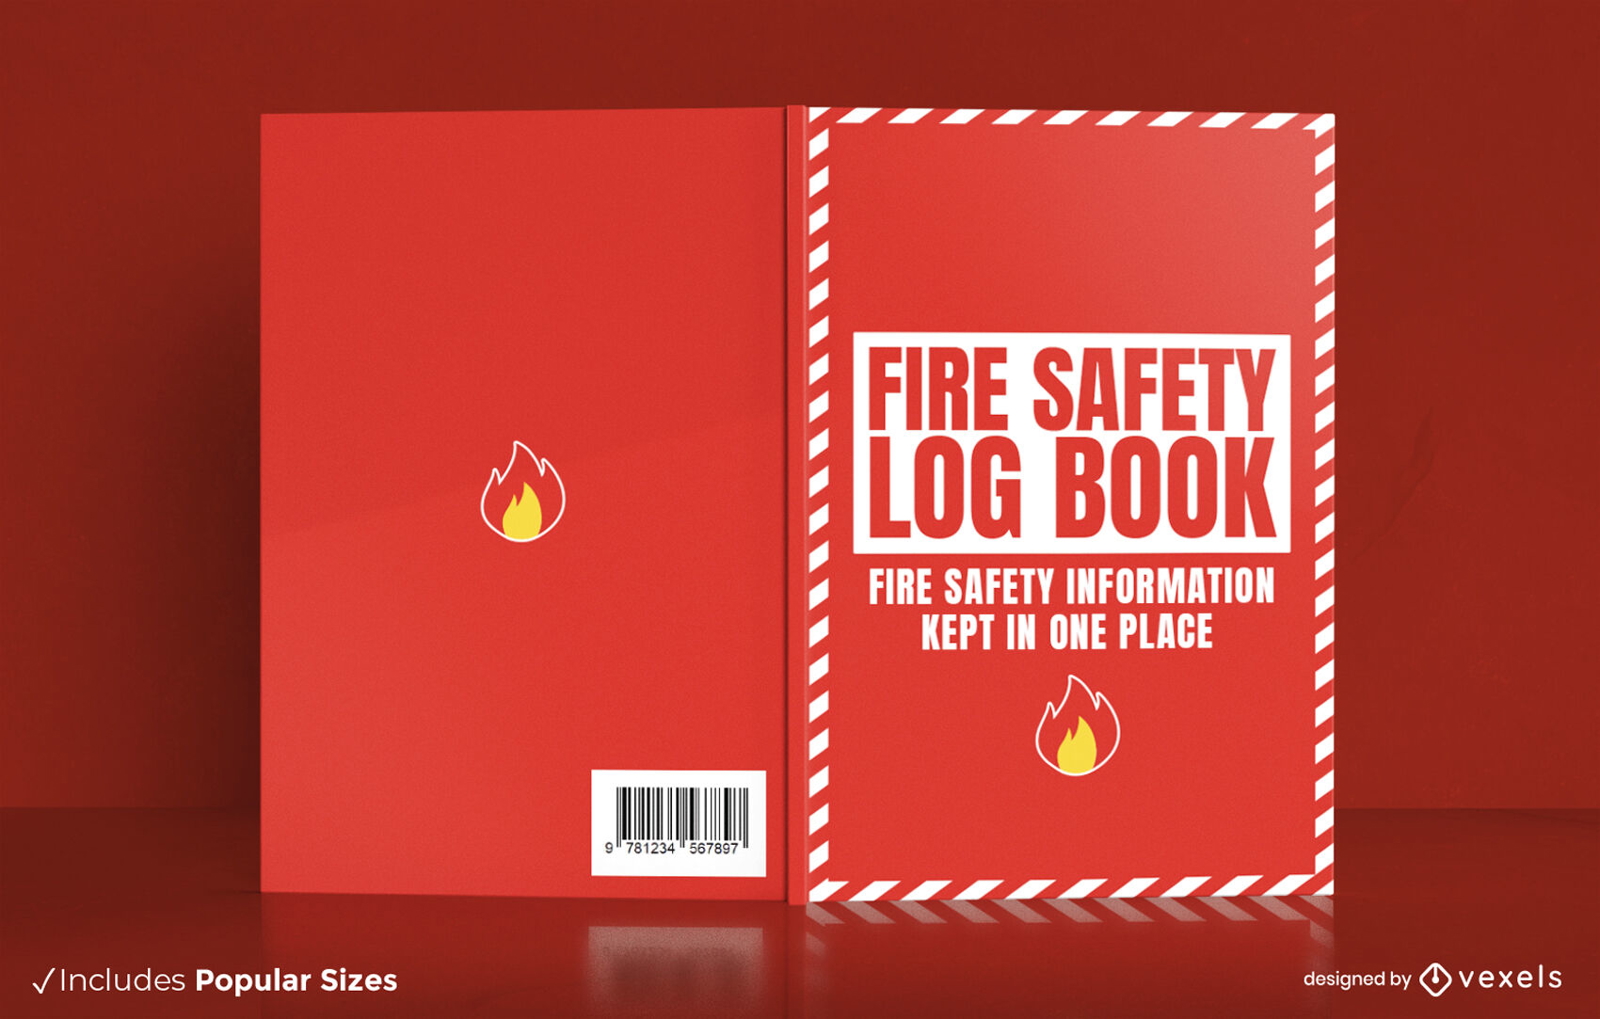 Fireman safety book cover design